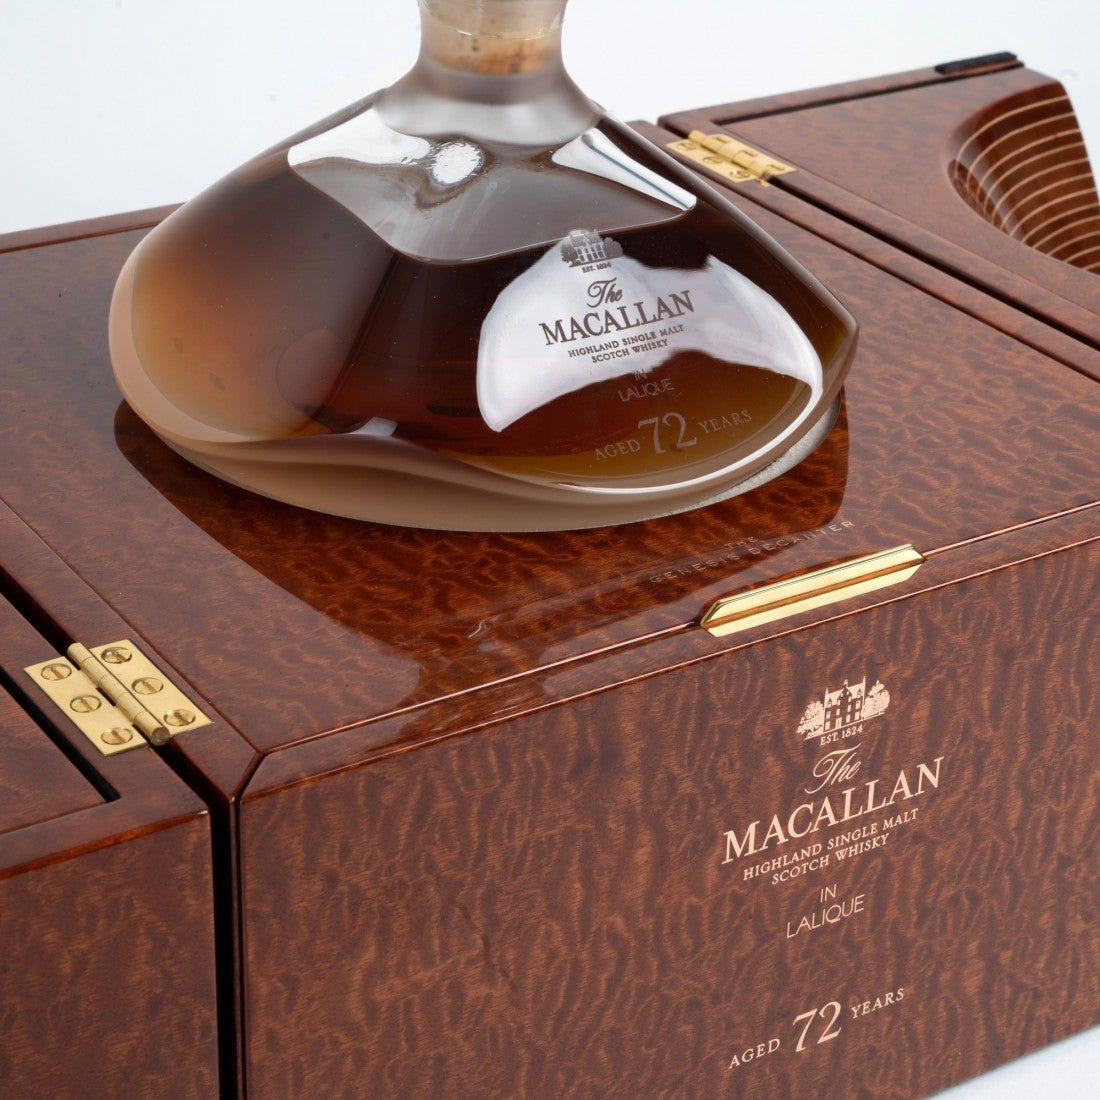 Macallan Lalique 72 yr old Single Malt Scotch Whisky